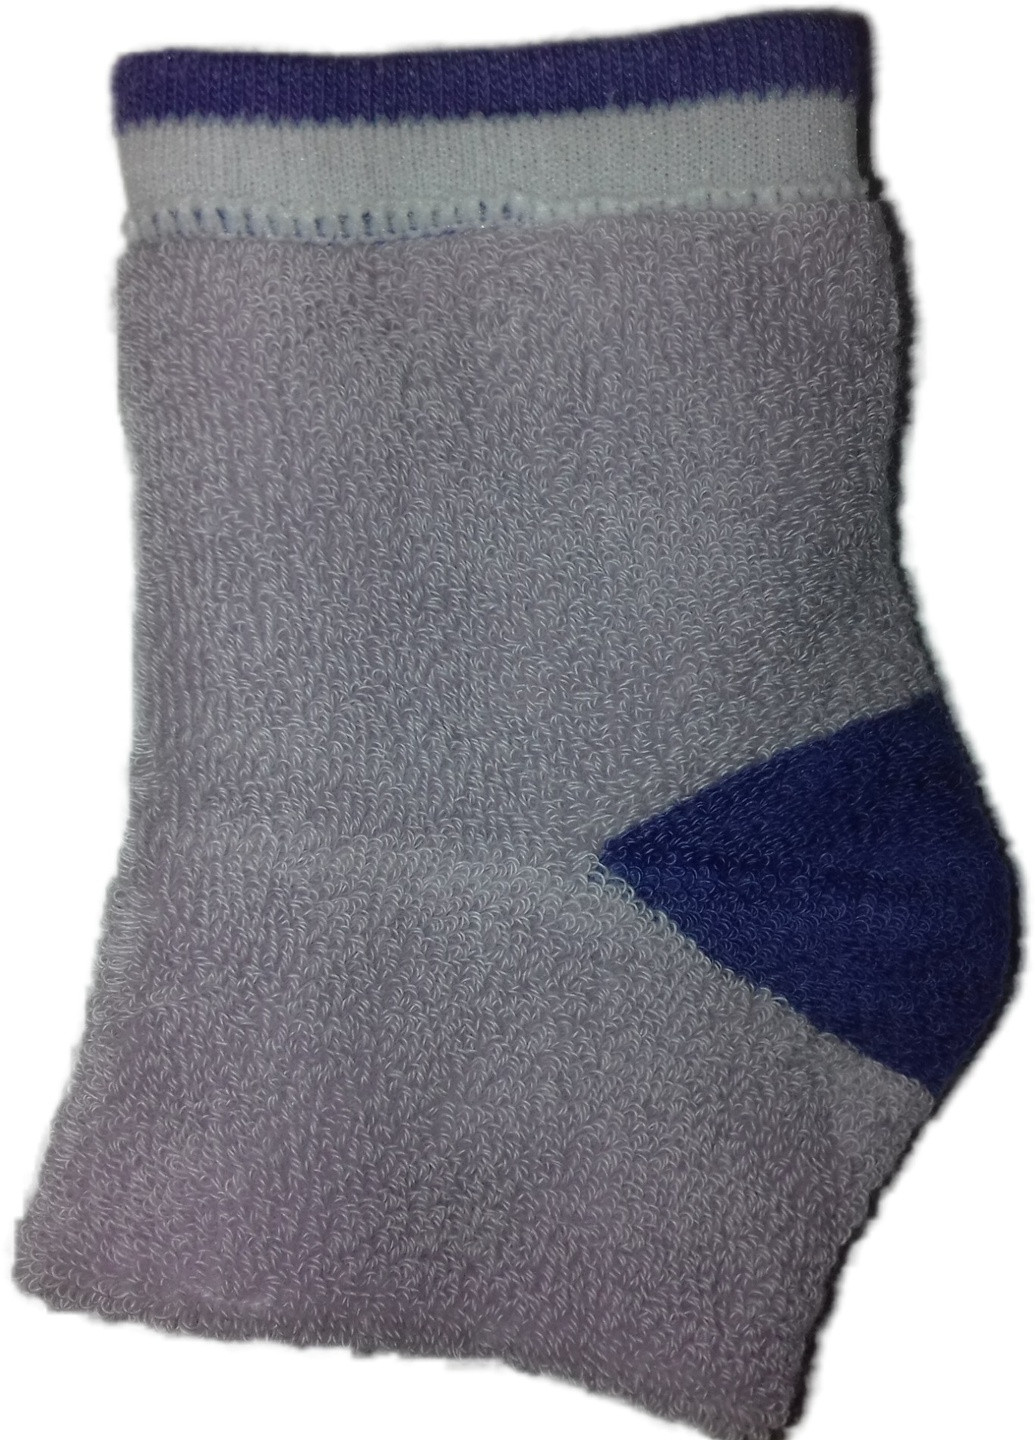 Шкарпетки плюш ТМ "Нова пара" смайлик 111 НОВА ПАРА середня висота (257155530)